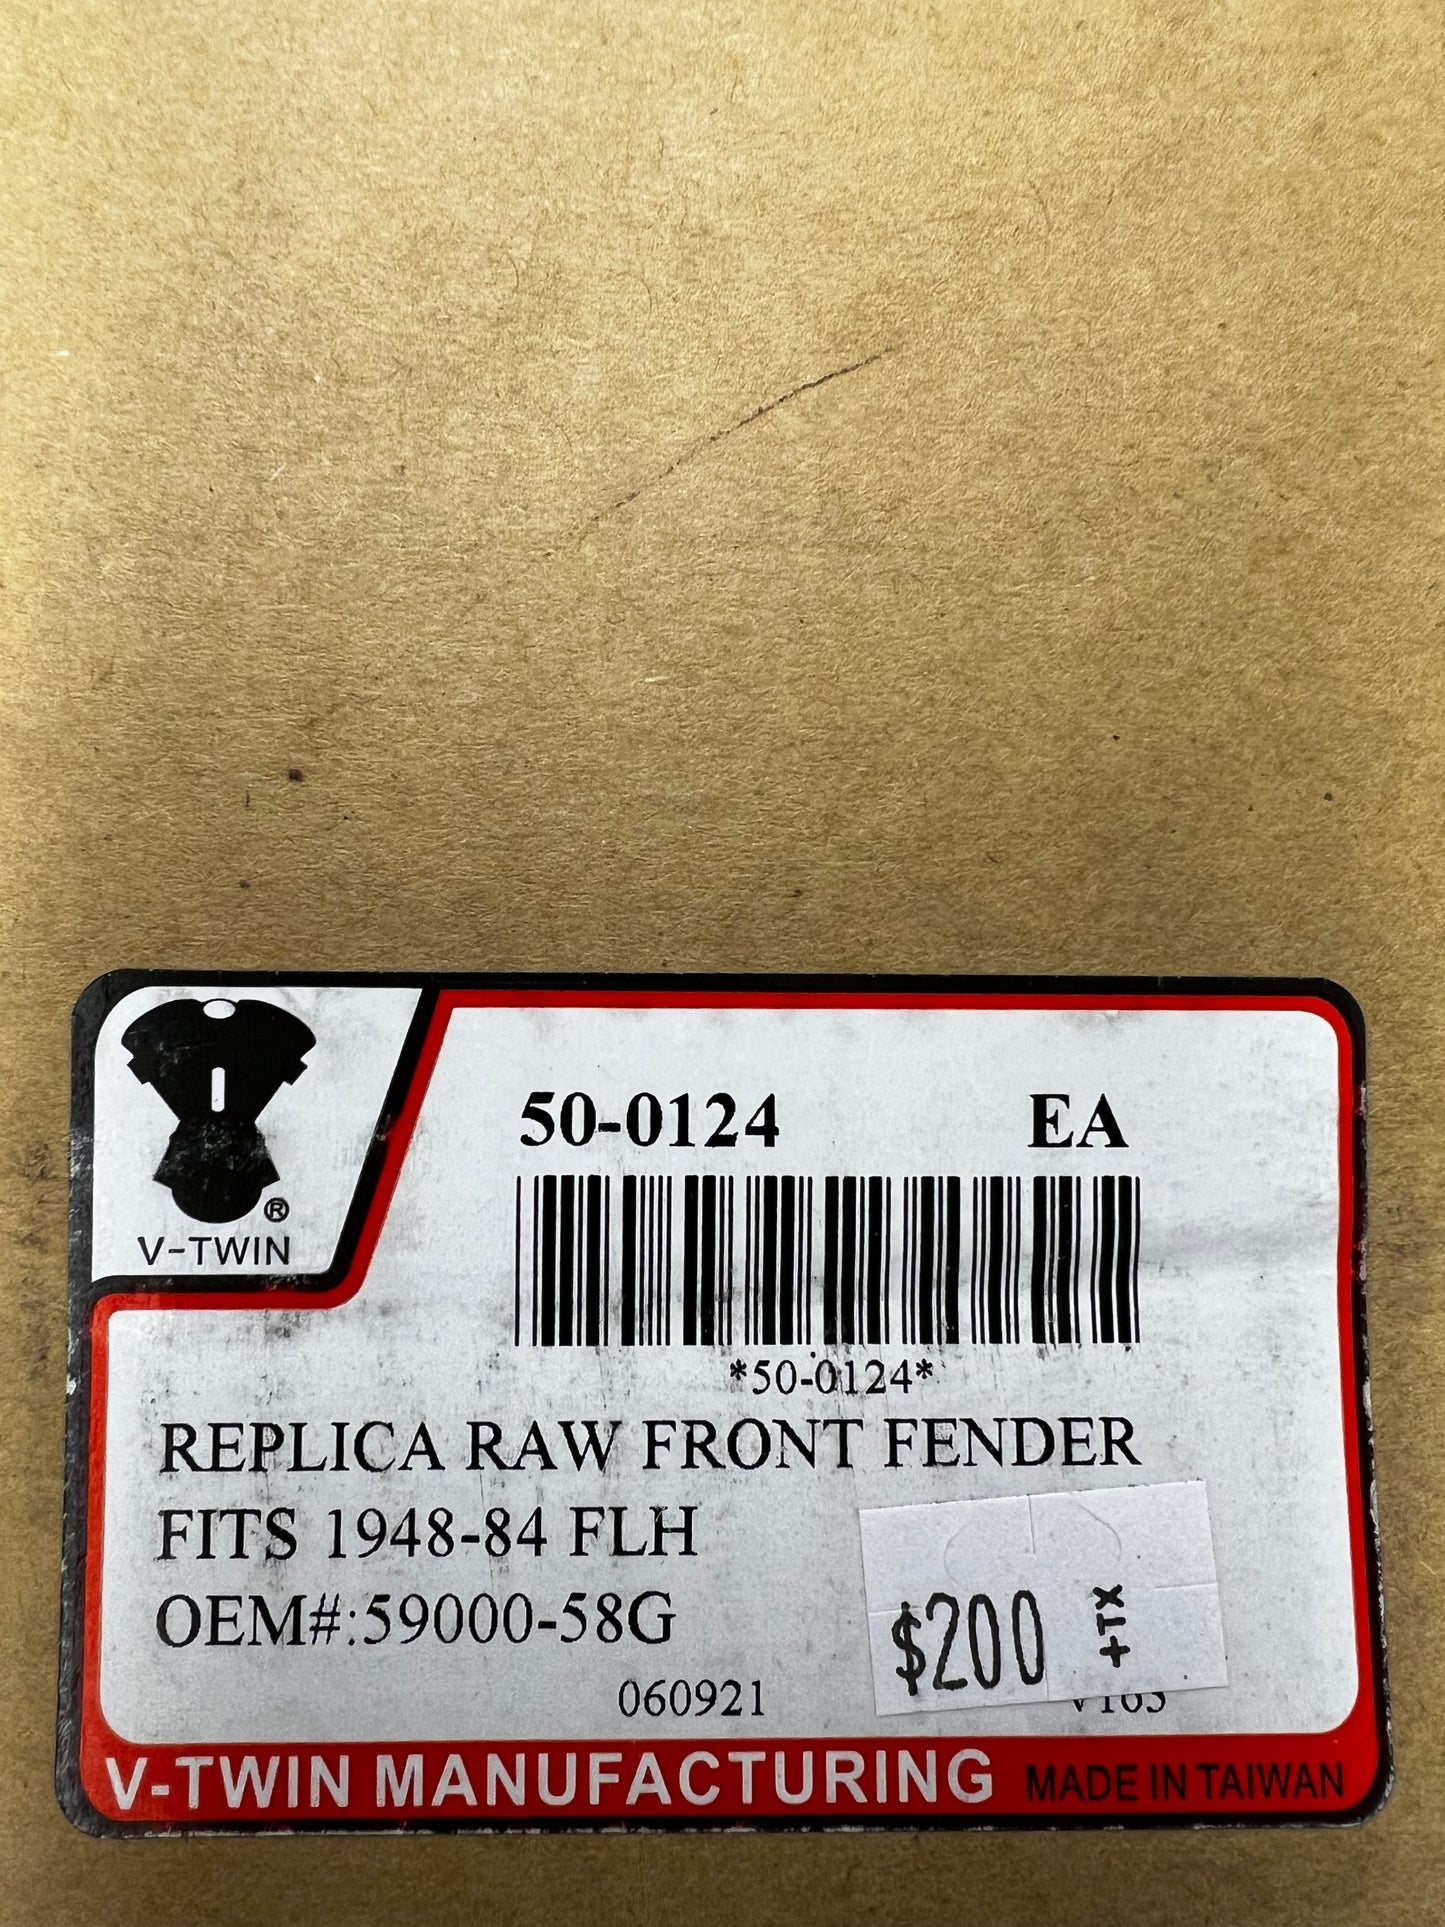 Replica Raw Front Fender